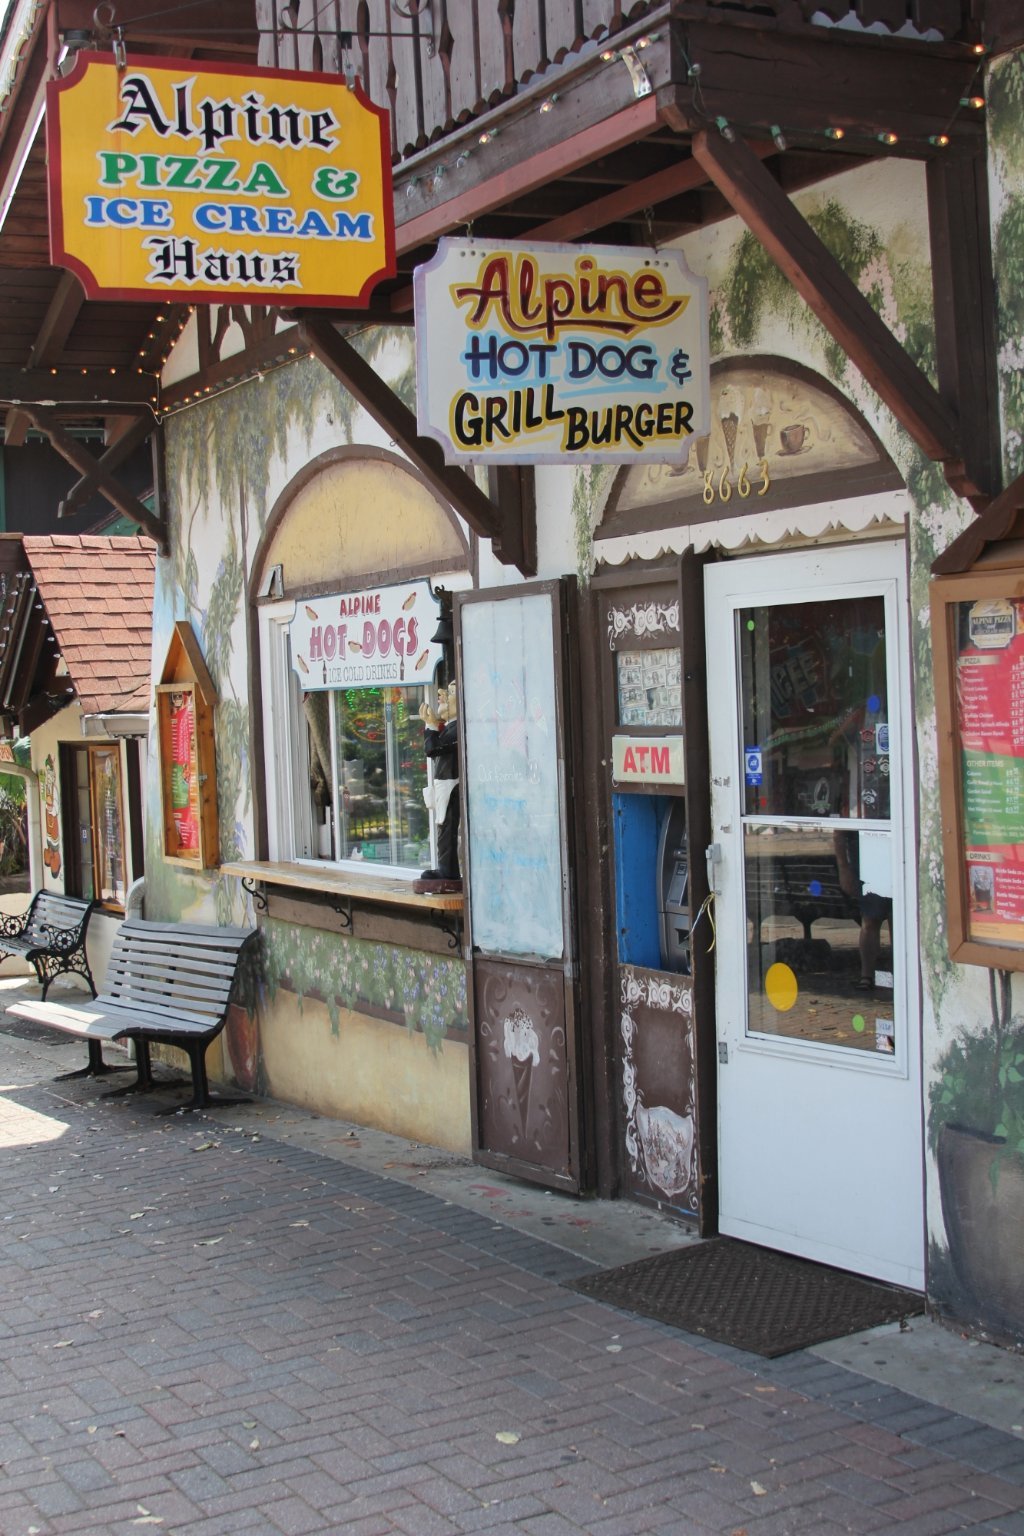 Alpine Hot Dog & Grill Burger